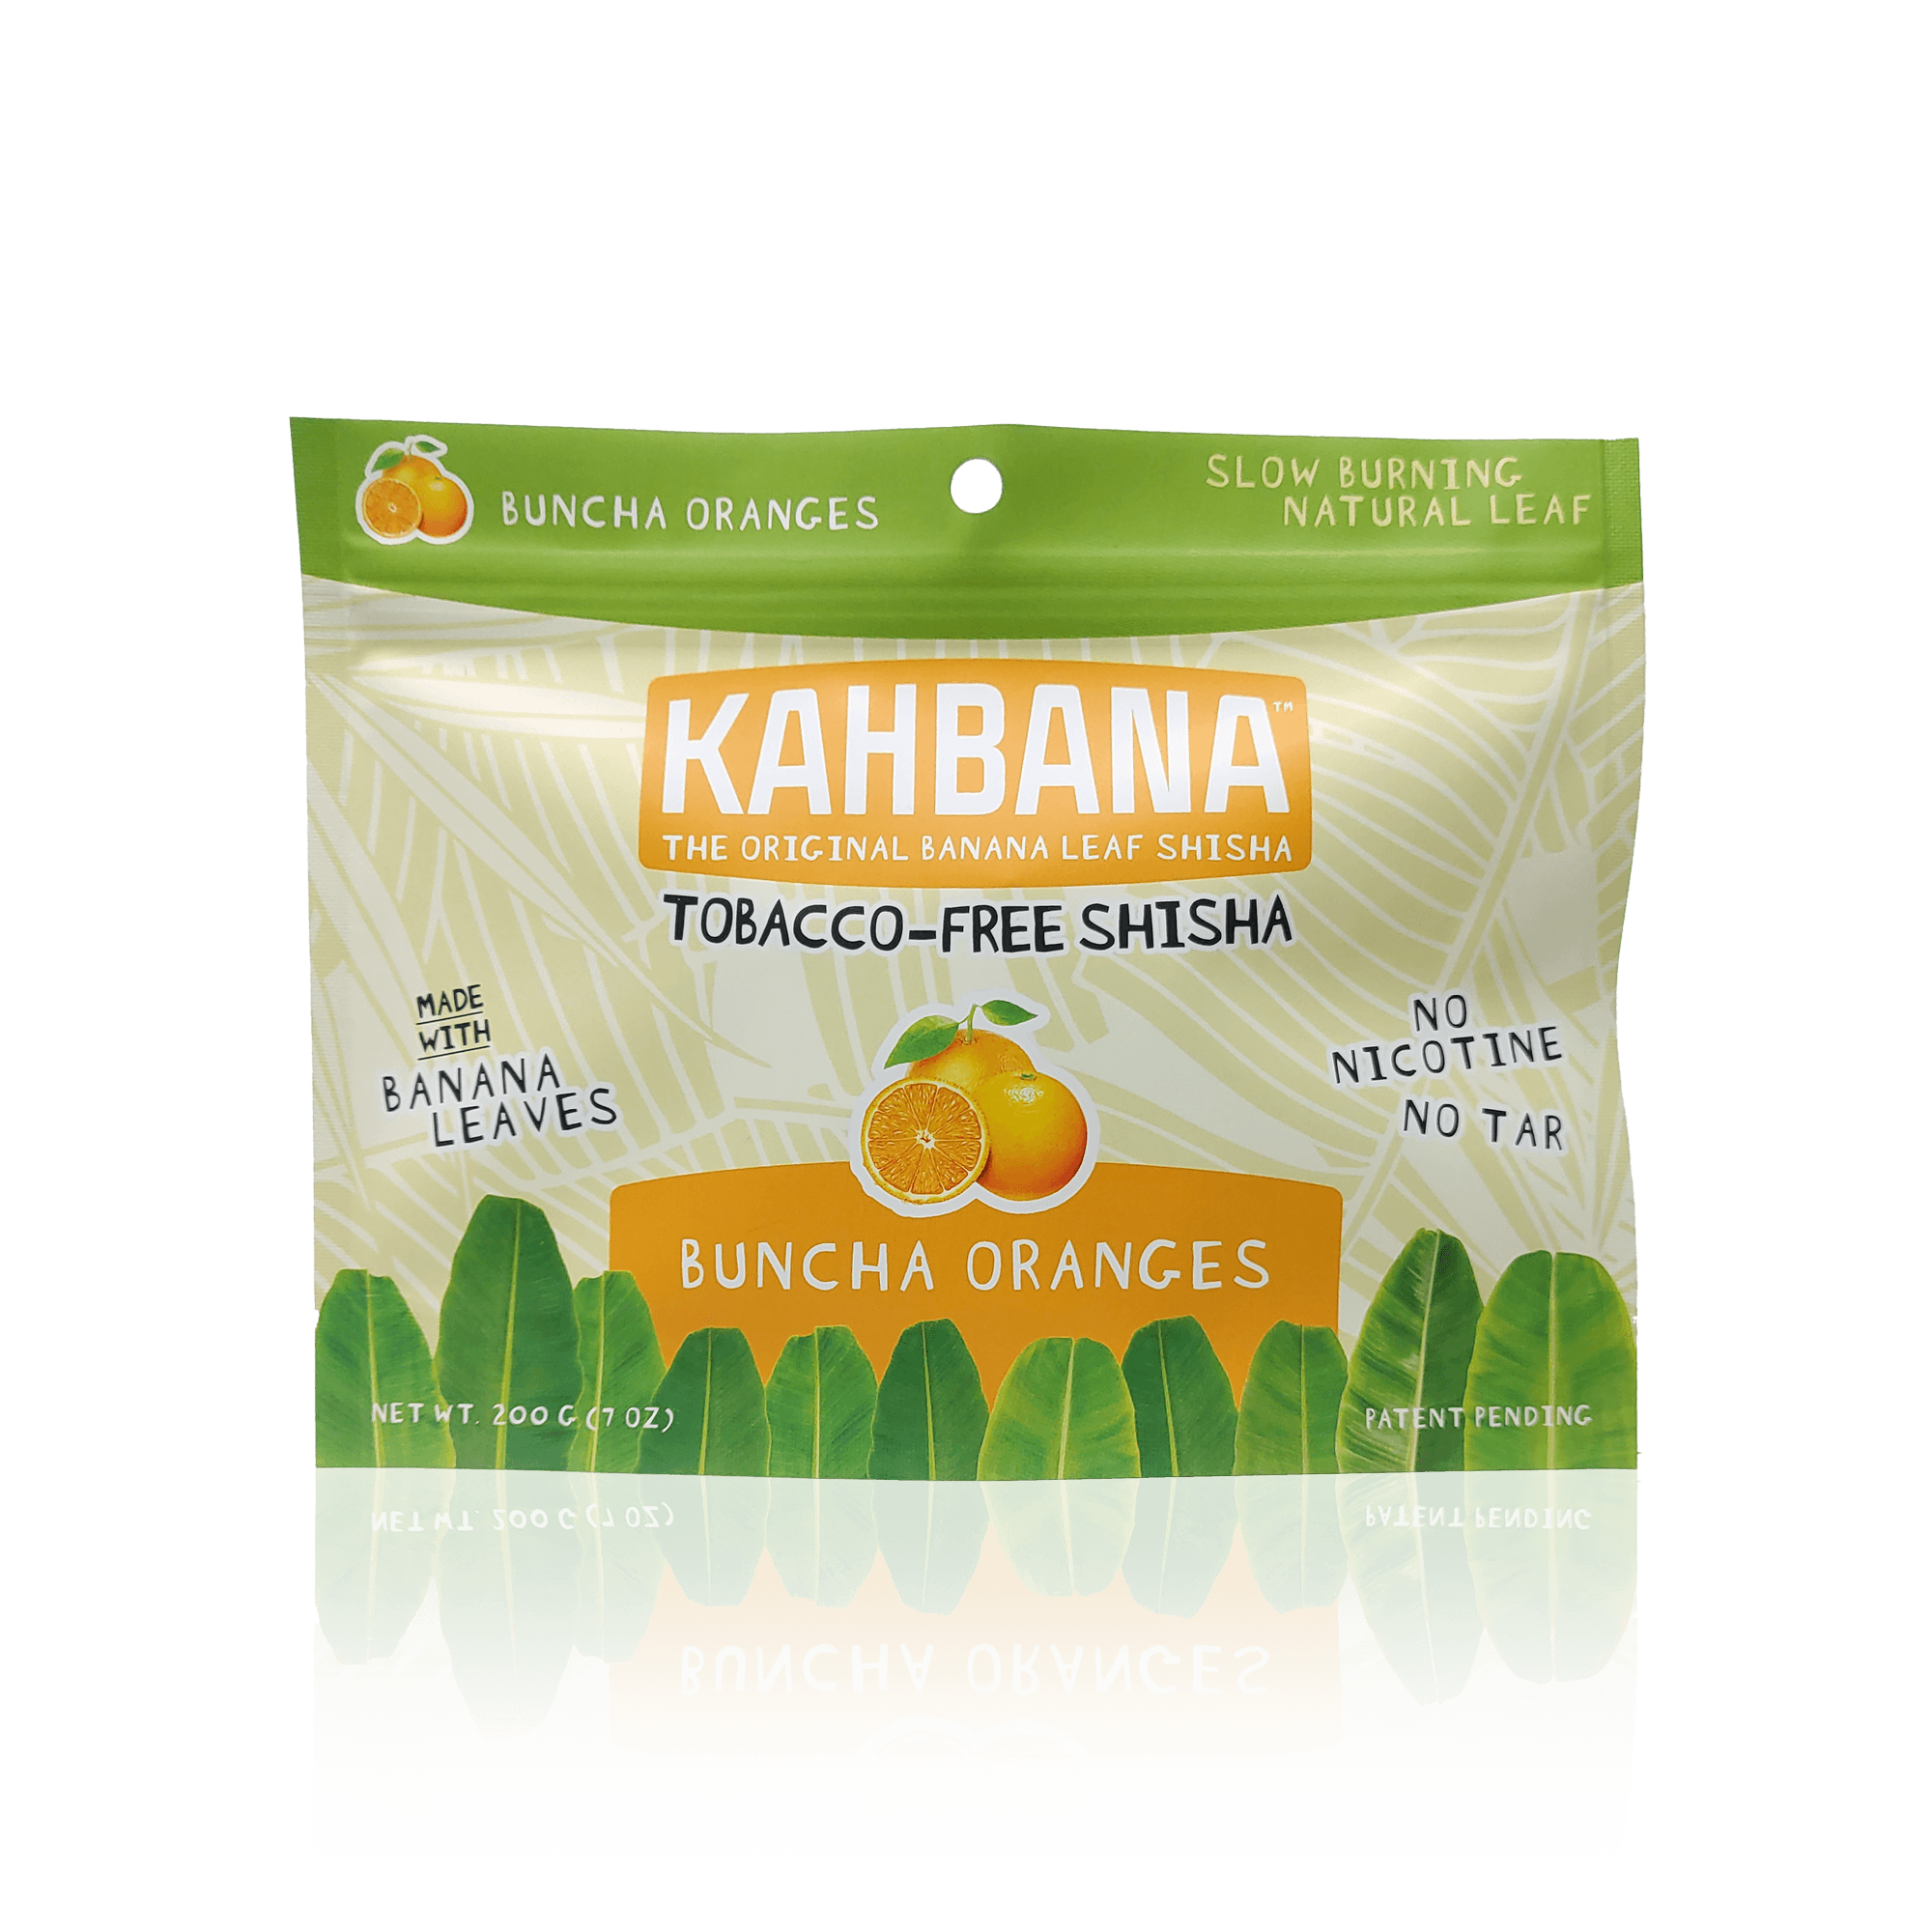 KAHBANA Original Banana Leaf Shisha Buncha Oranges - Lavoo